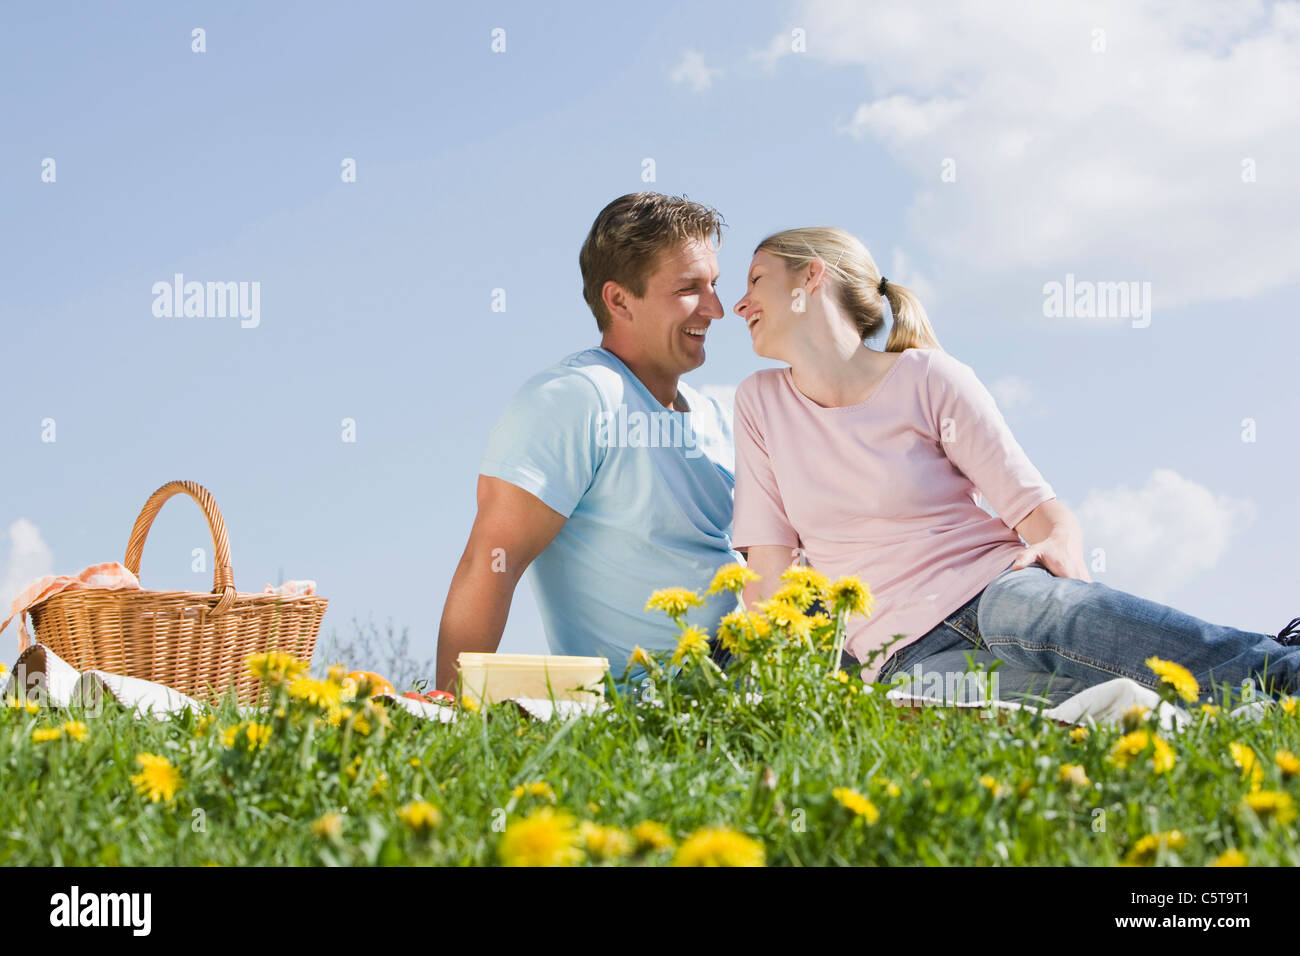 Germany, Bavaria, Munich, Young couple having picnic, smiling, portrait Banque D'Images